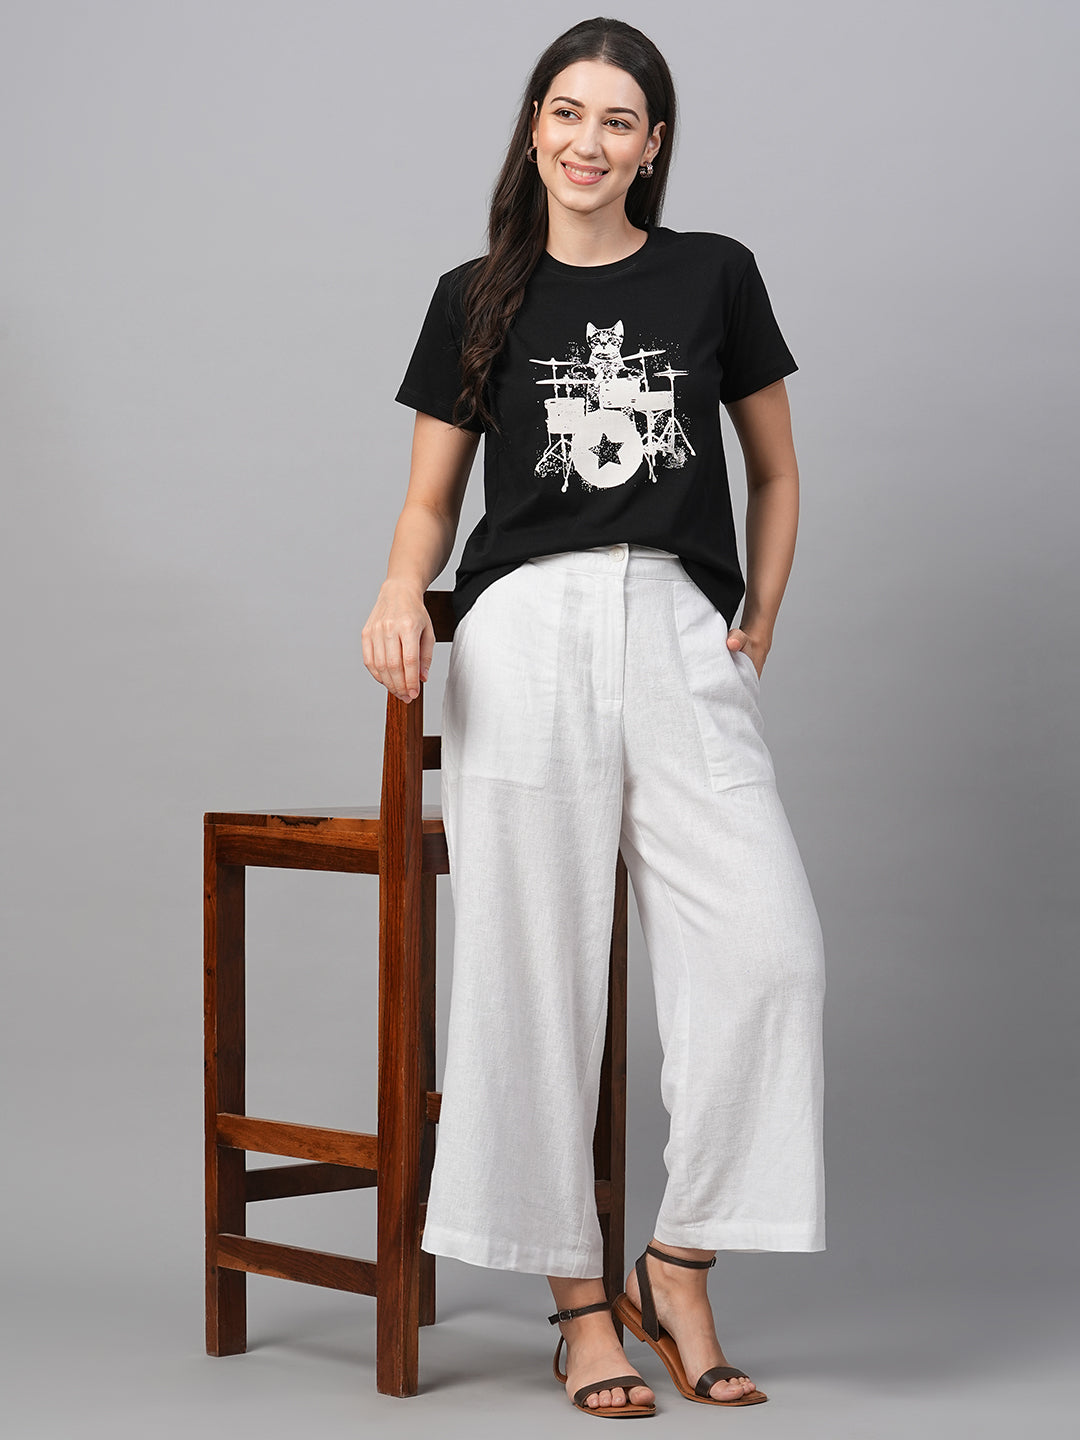 Women's Black Cotton Regular Fit Tshirts